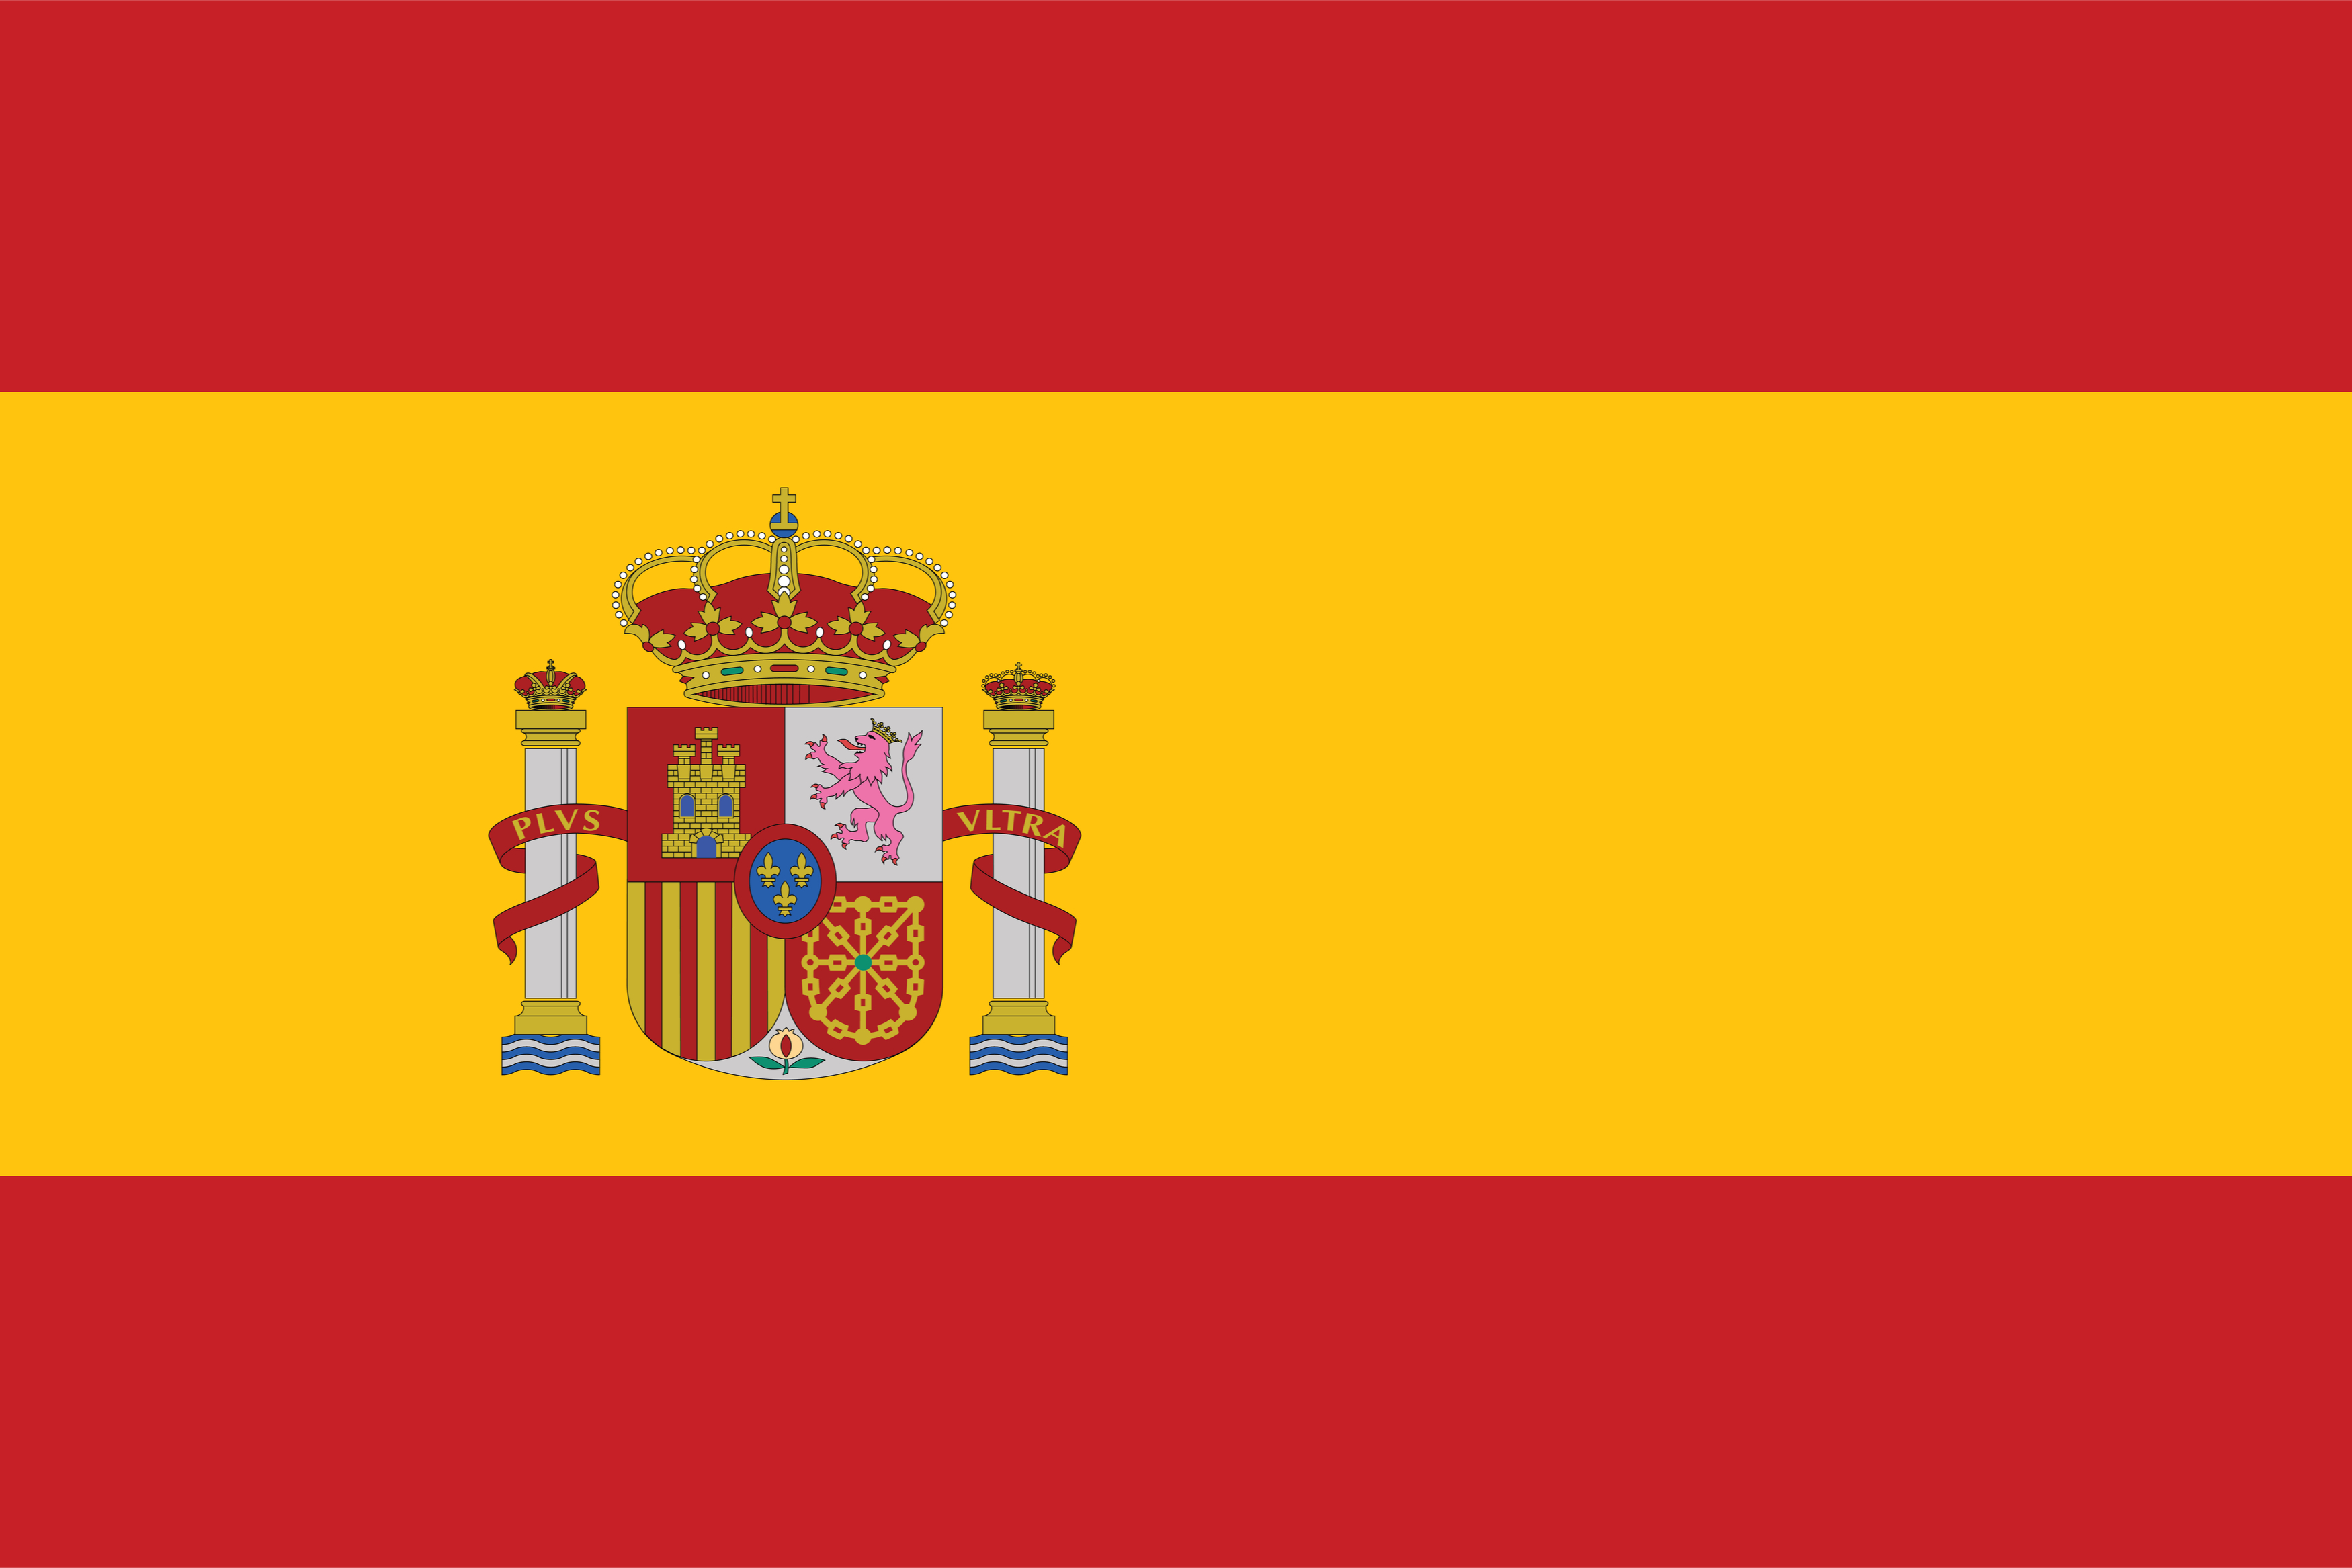 spanish symbol